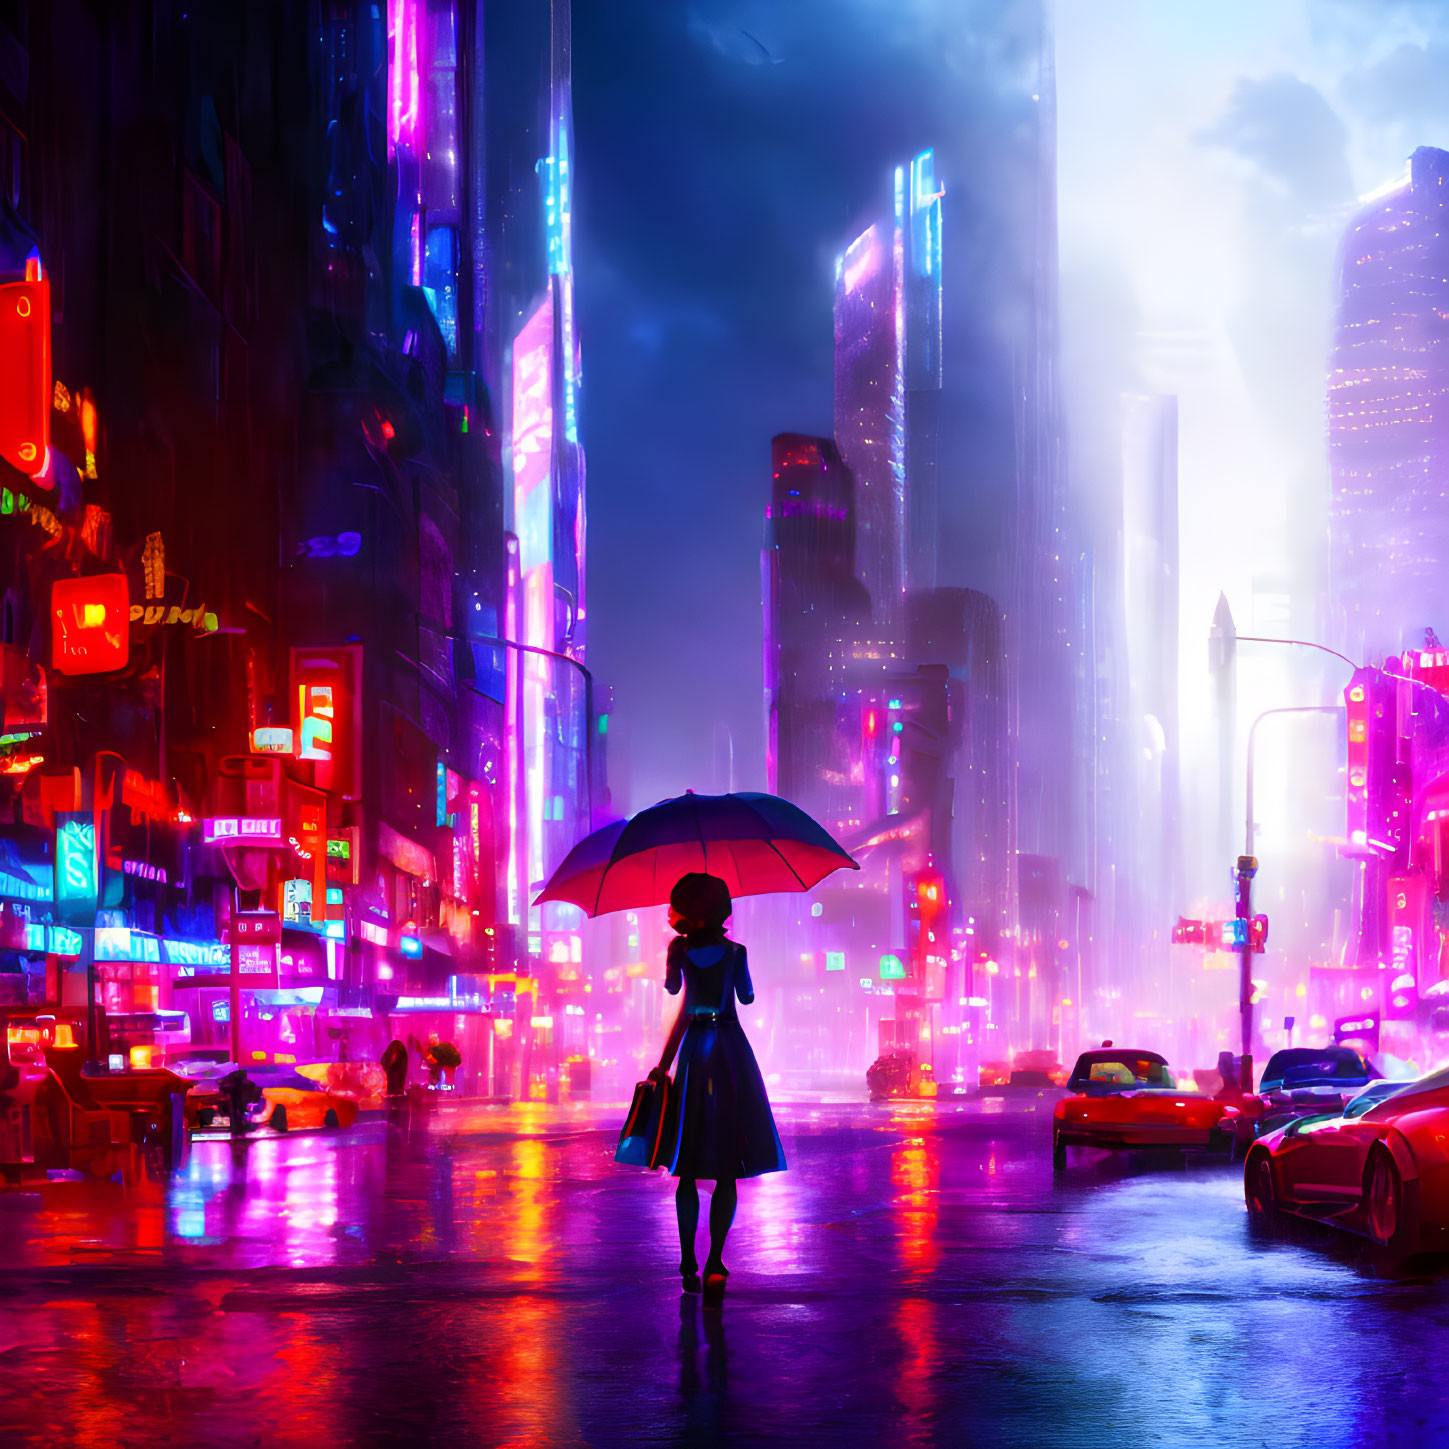 Person with umbrella on neon-lit rainy city street at night